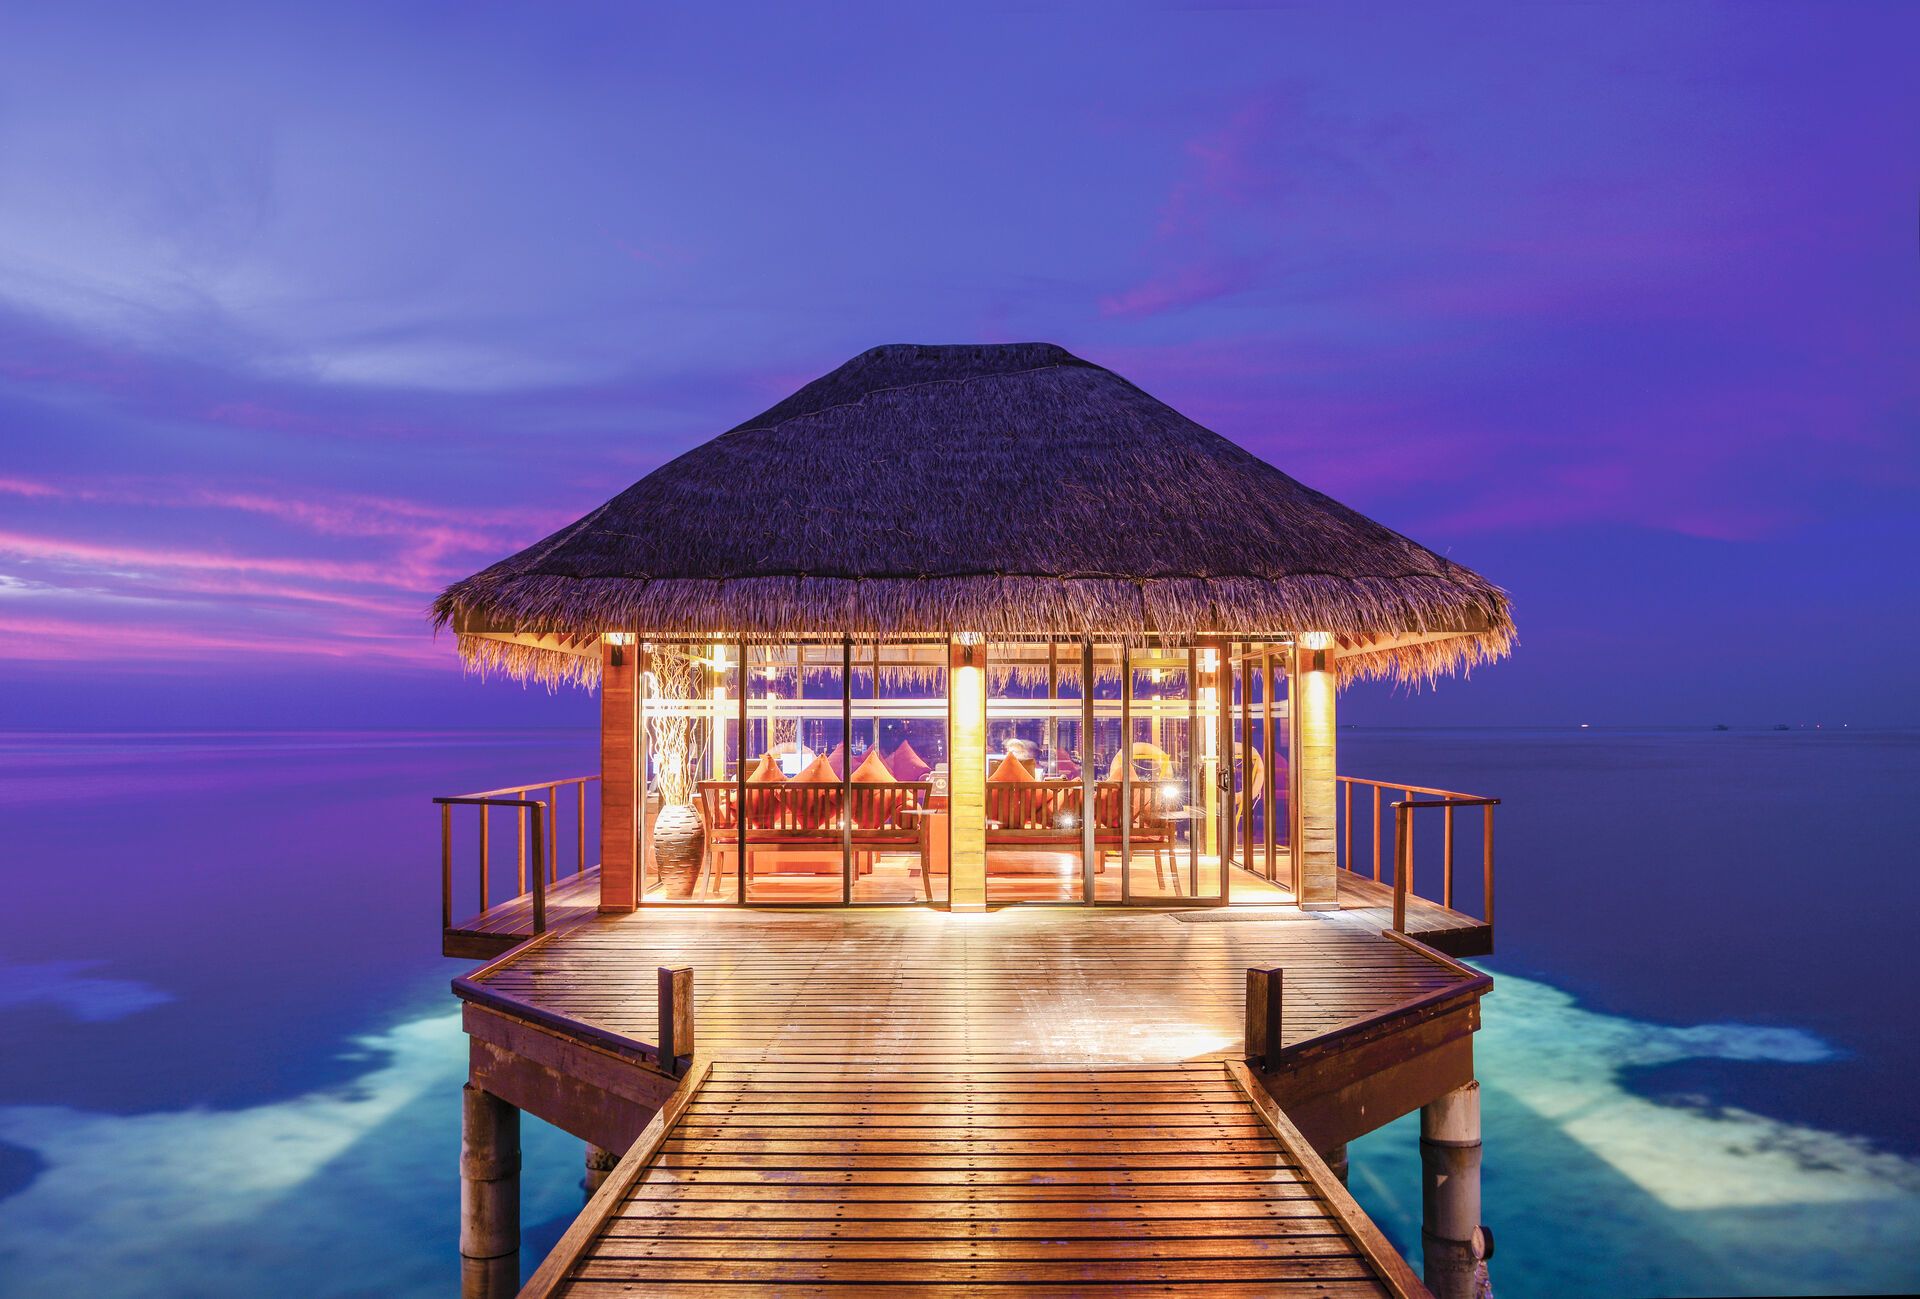 Maldives - Hotel Adaaran Select Hudhuranfushi Resort 4* - transfert inclus